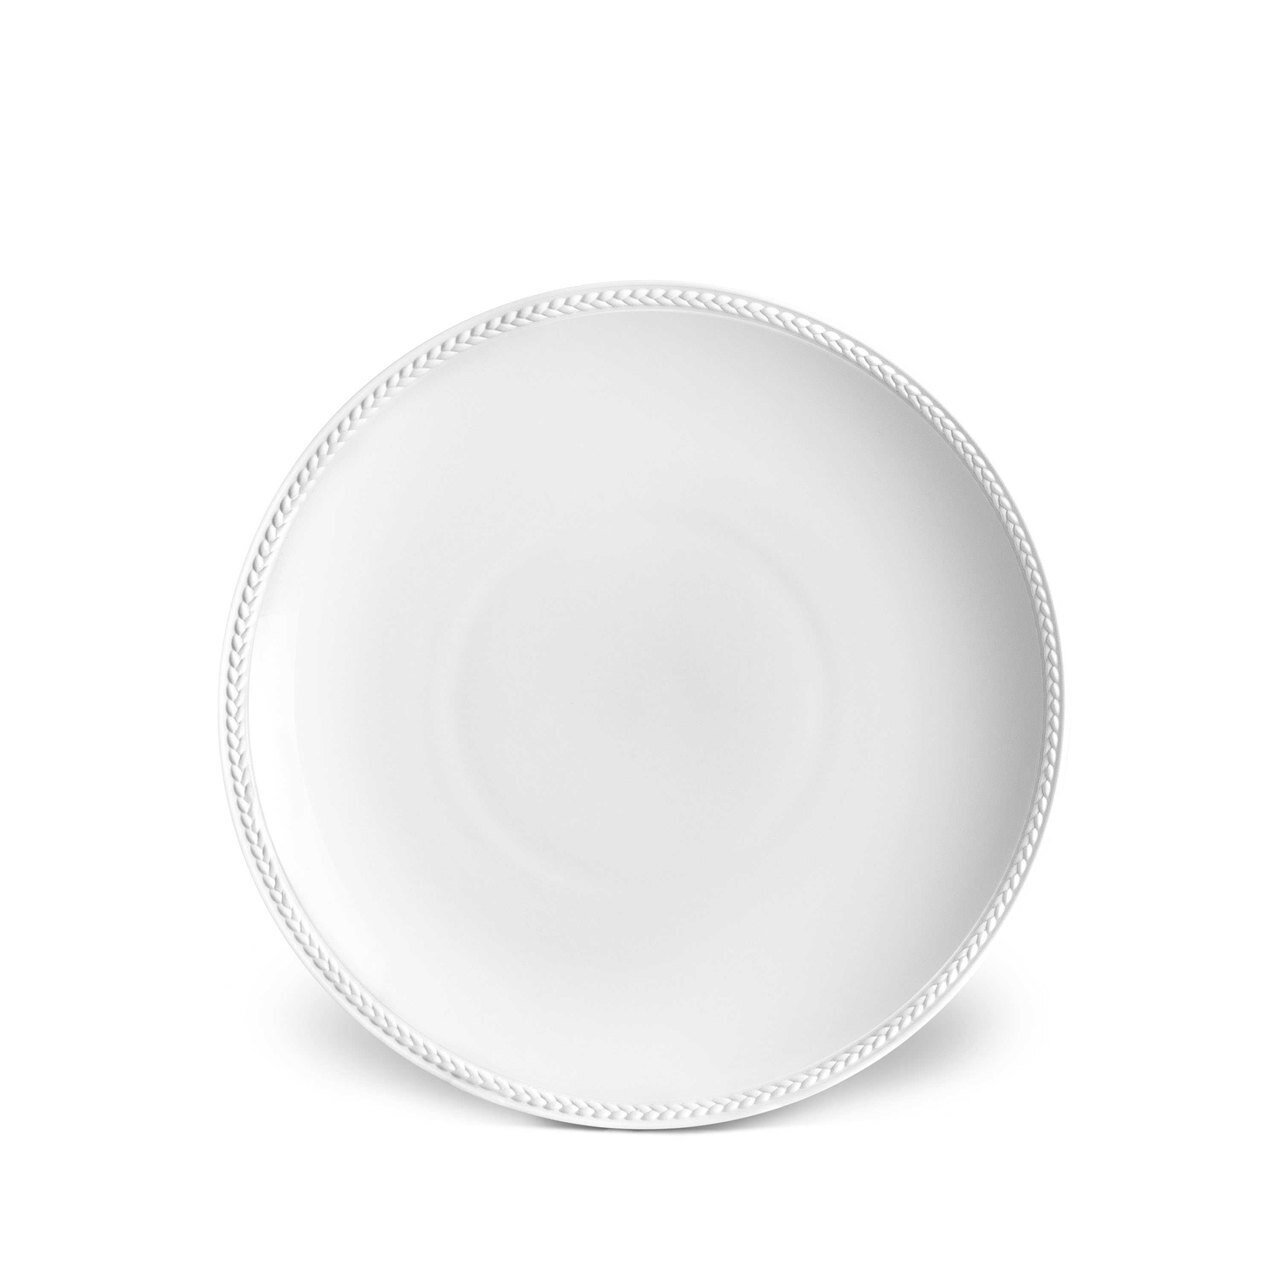 L'Objet Soie Tressee Soup Plate White